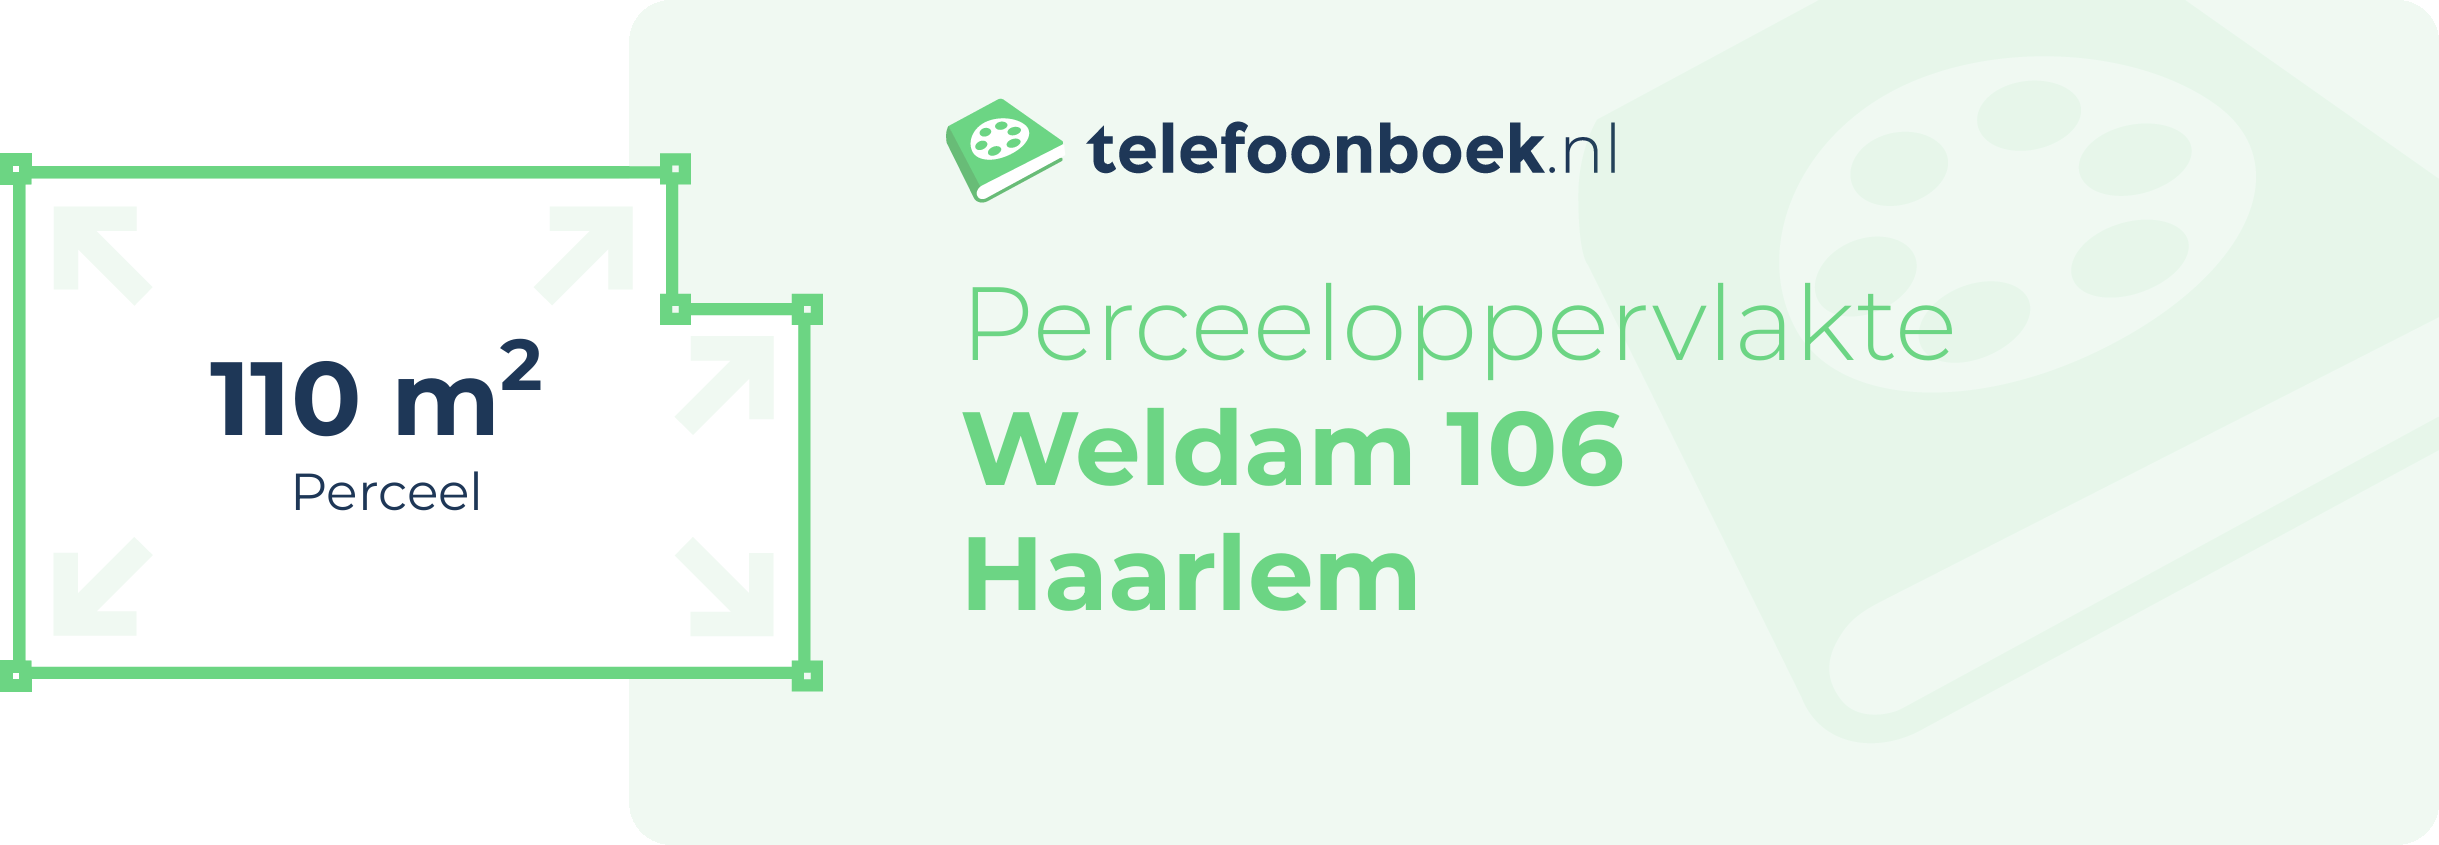 Perceeloppervlakte Weldam 106 Haarlem